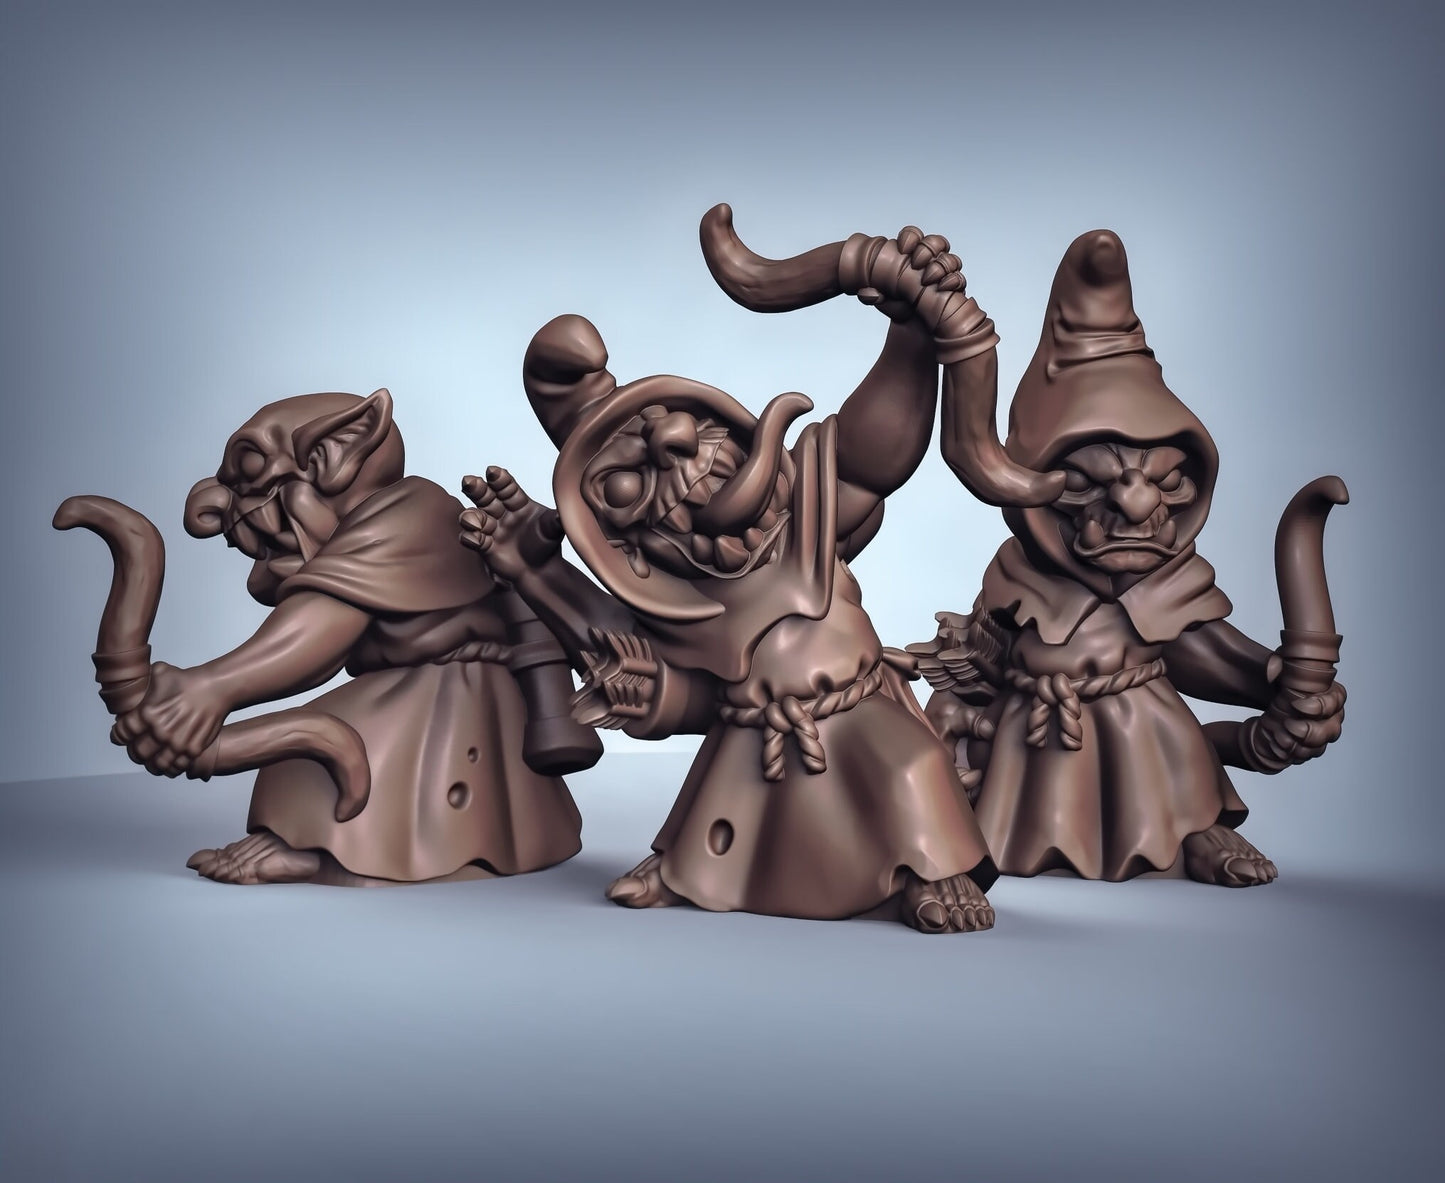 Goblin Bundle - Duncan Shadow Printed Miniatures | Dungeons & Dragons | Pathfinder | Tabletop